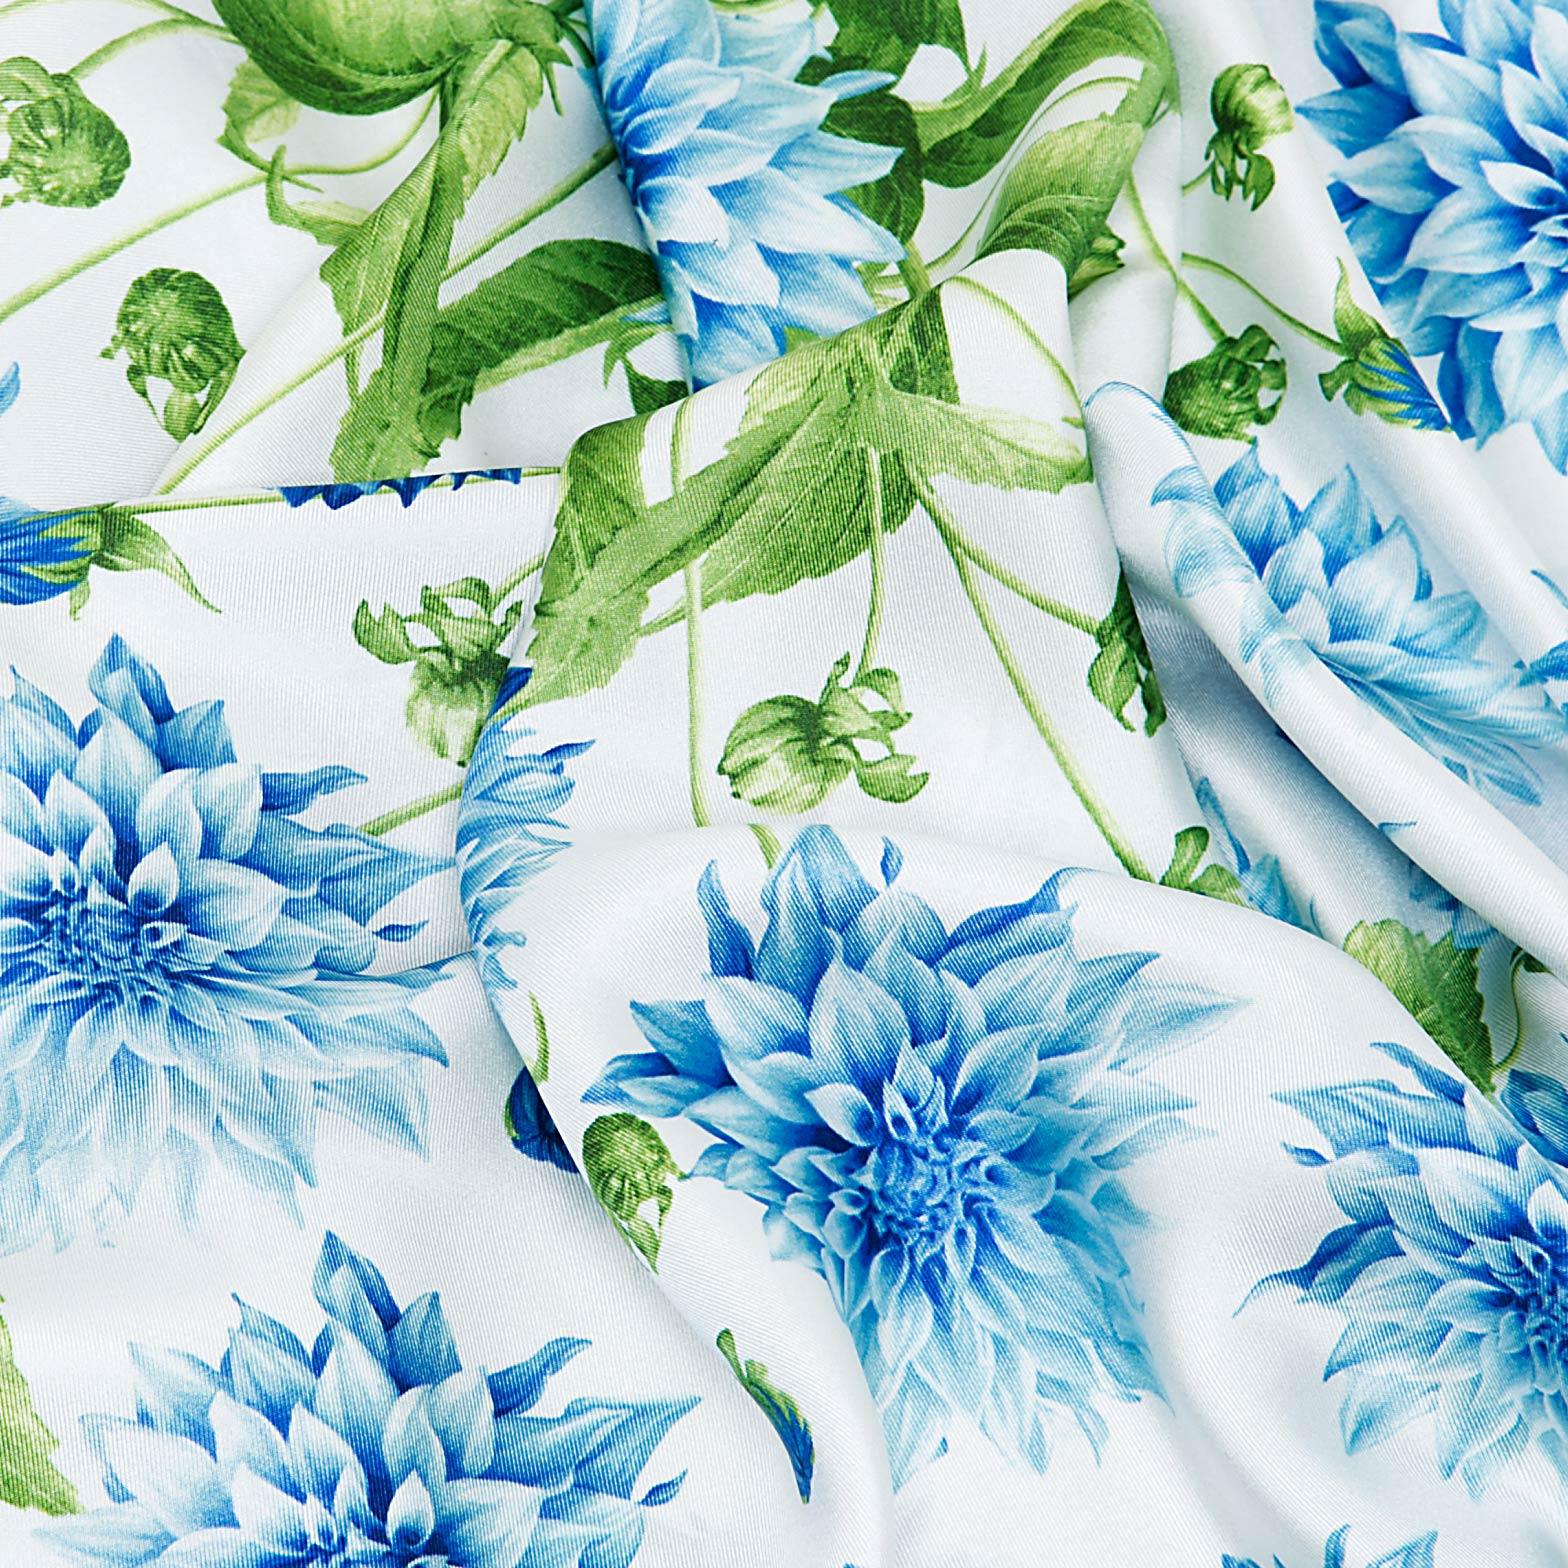 Blue Dahlia Garden Silk Scarf - Harmonizing London's design with Italian craftsmanship, a splendid gift choice.